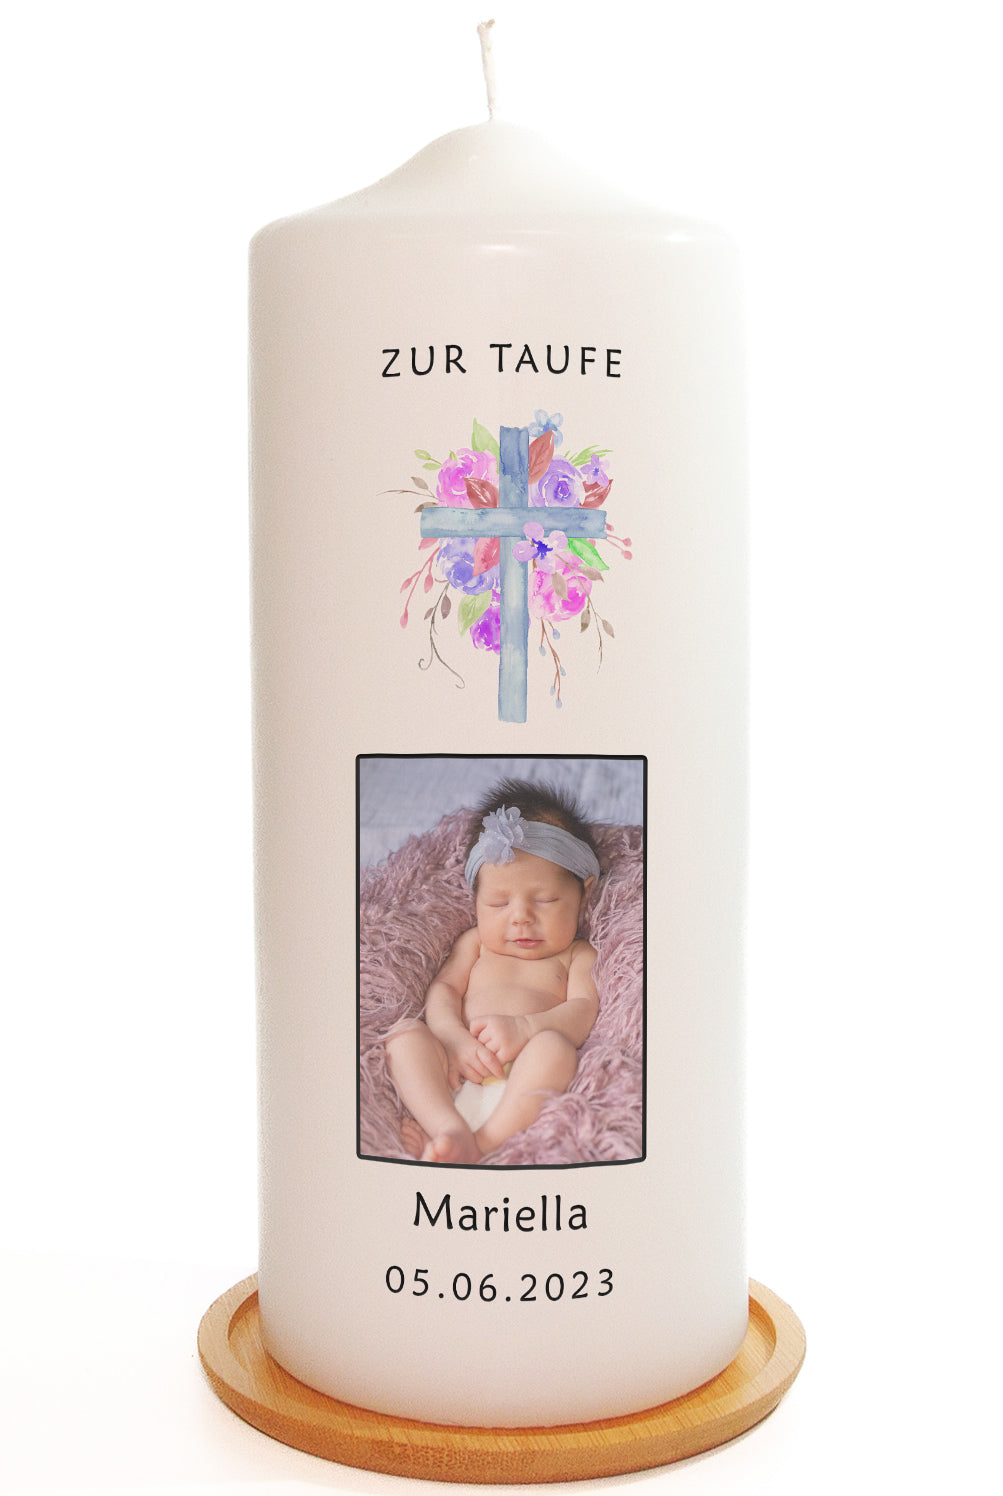 Taufkerze "Zur Taufe" - mit Namen, Geburtsdatum & Foto personalisiert